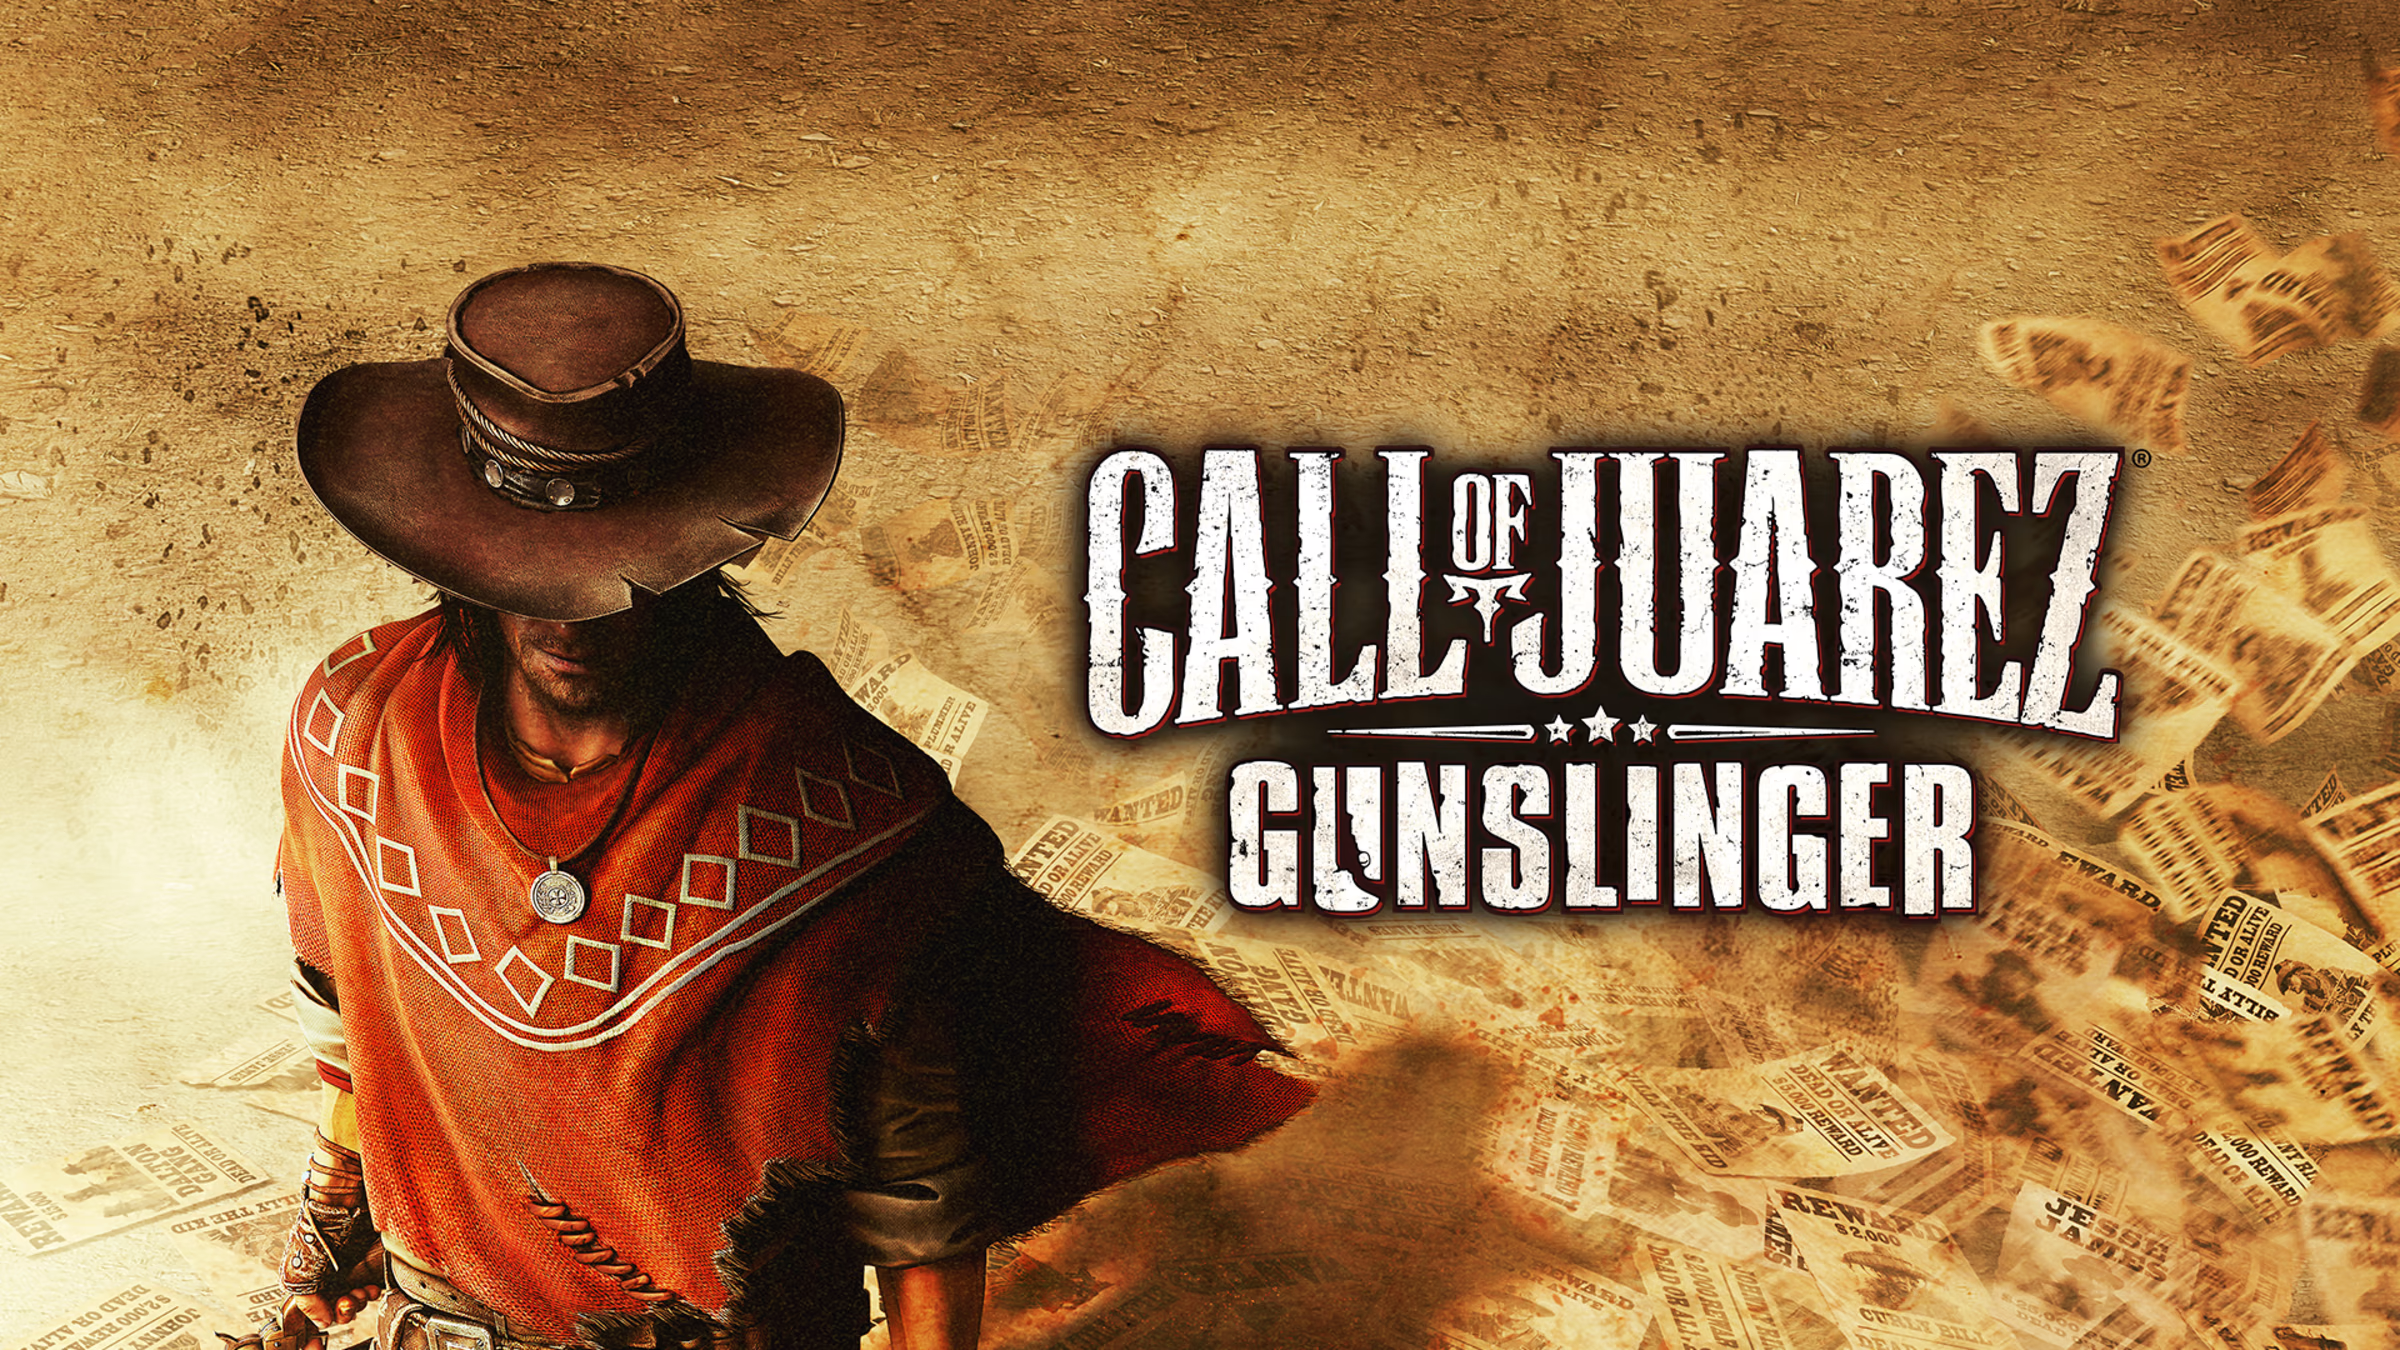 Call of juarez gunslinger стим фото 25